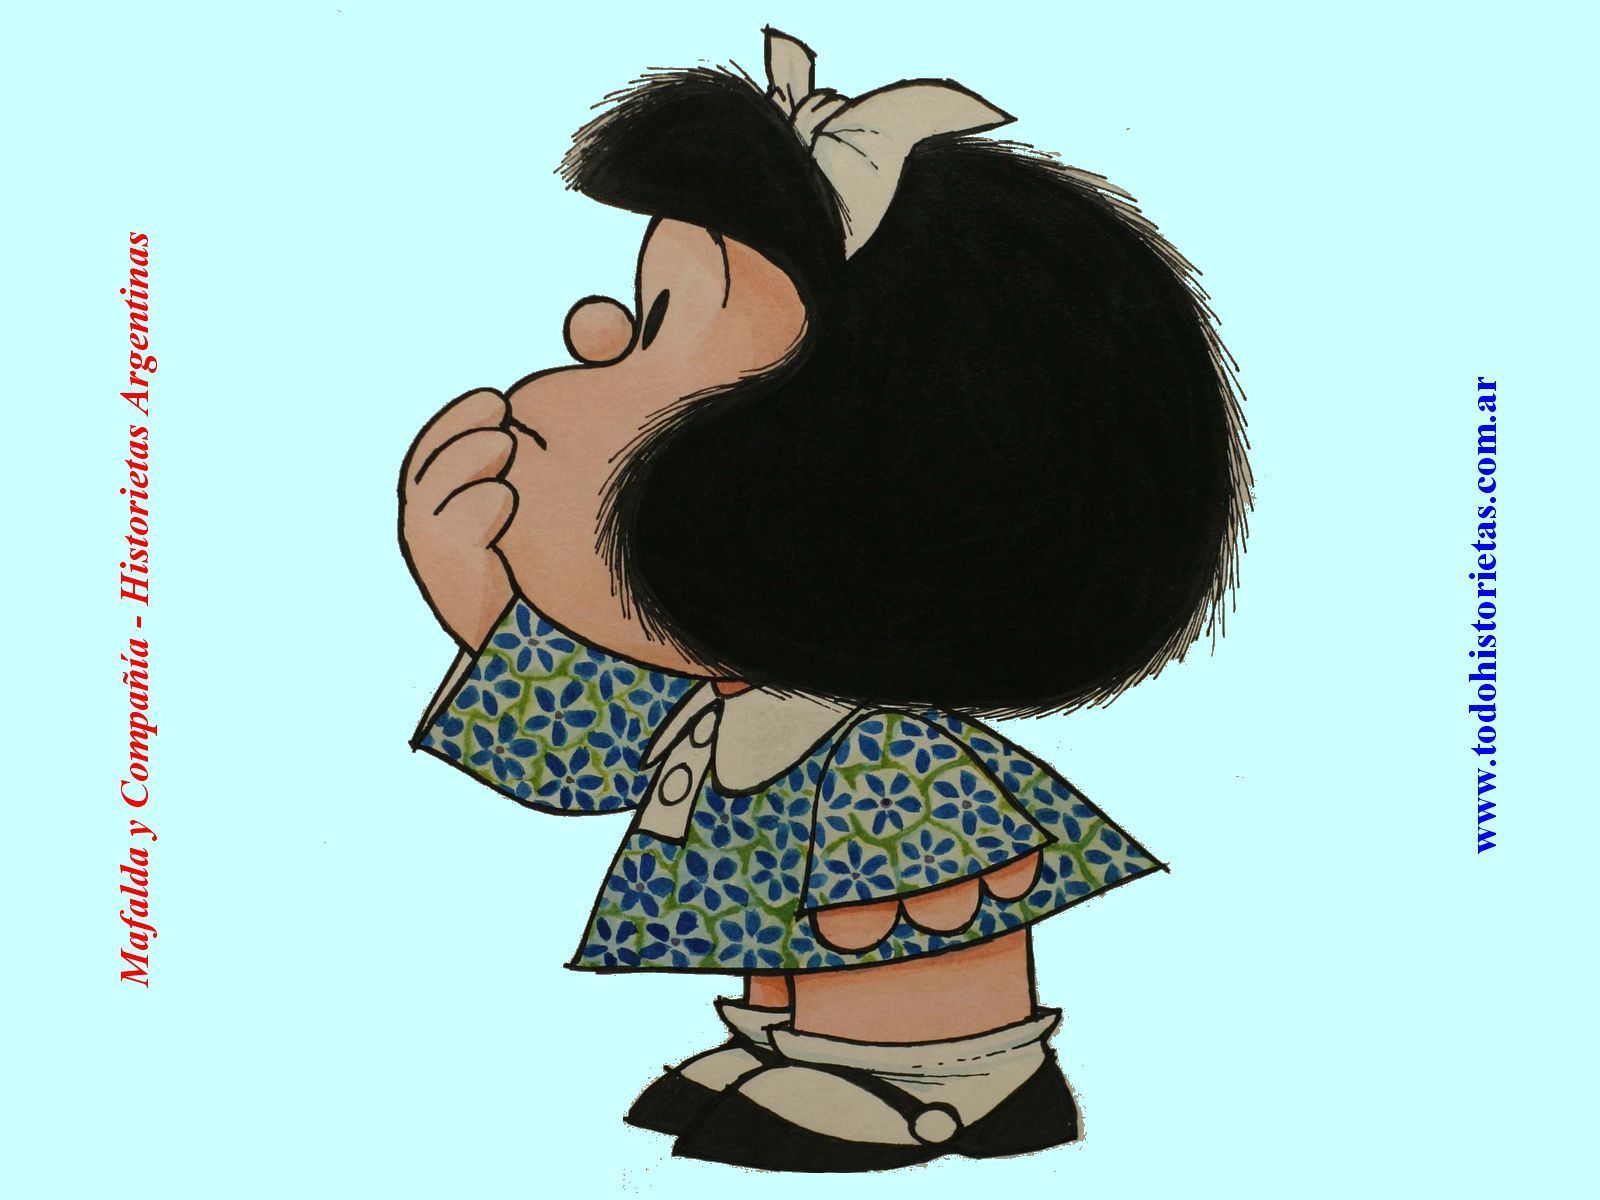 Mafalda Wallpapers